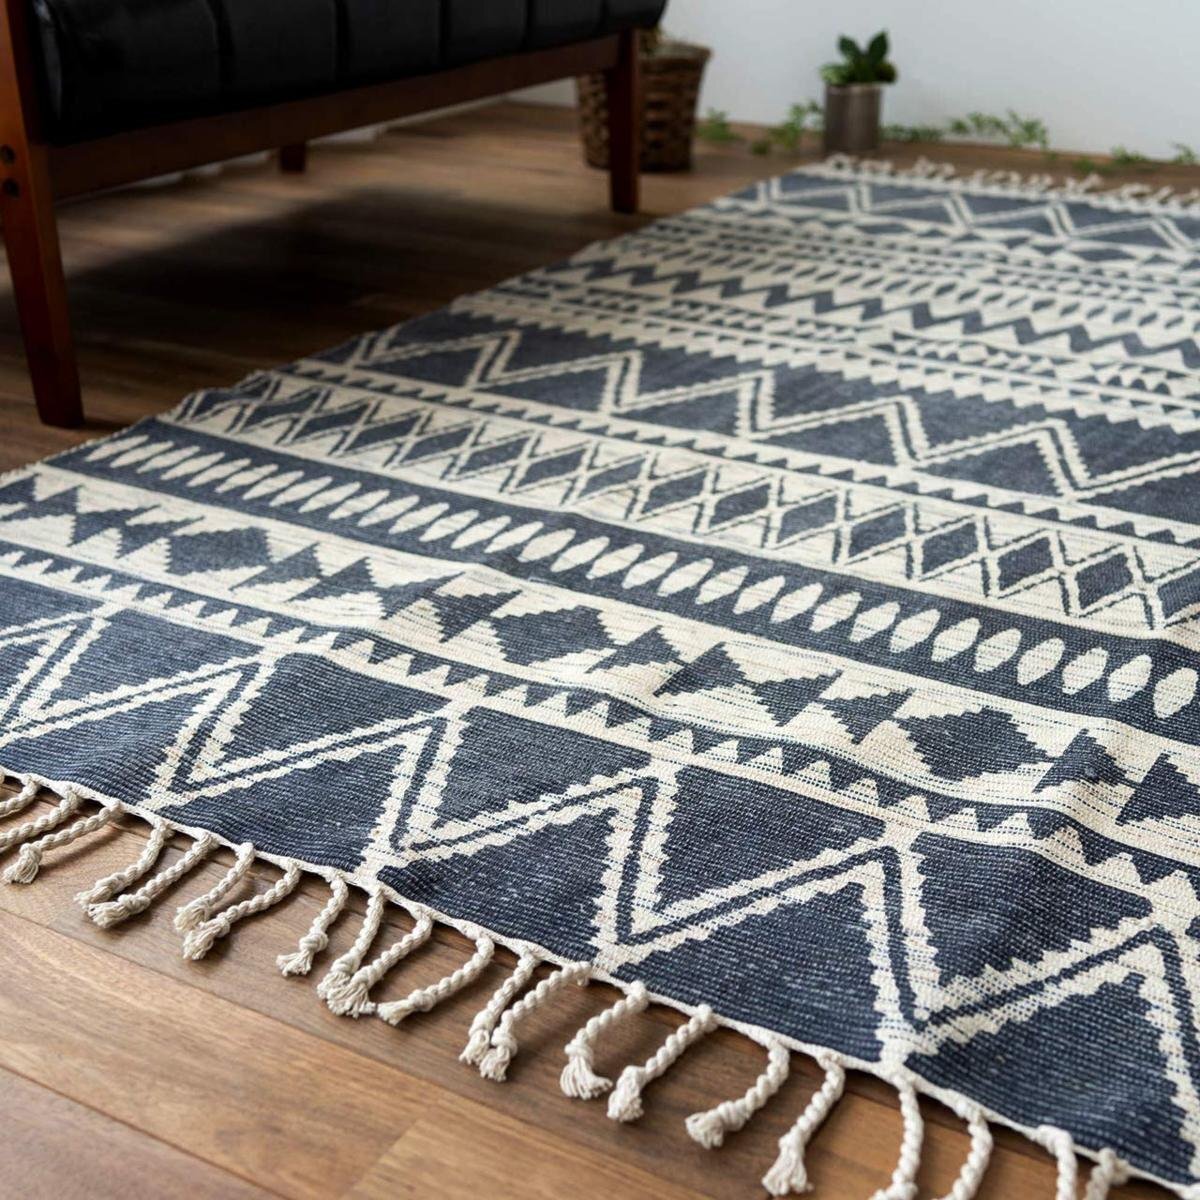 ■■ Sayan Alfombra Sayan Alfombra de algodón hecha a mano con diseño nativo Tapete Aprox. 100 x 150 cm 1 Tatami Marino, muebles, interior, alfombra, alfombra, estera, alfombra general